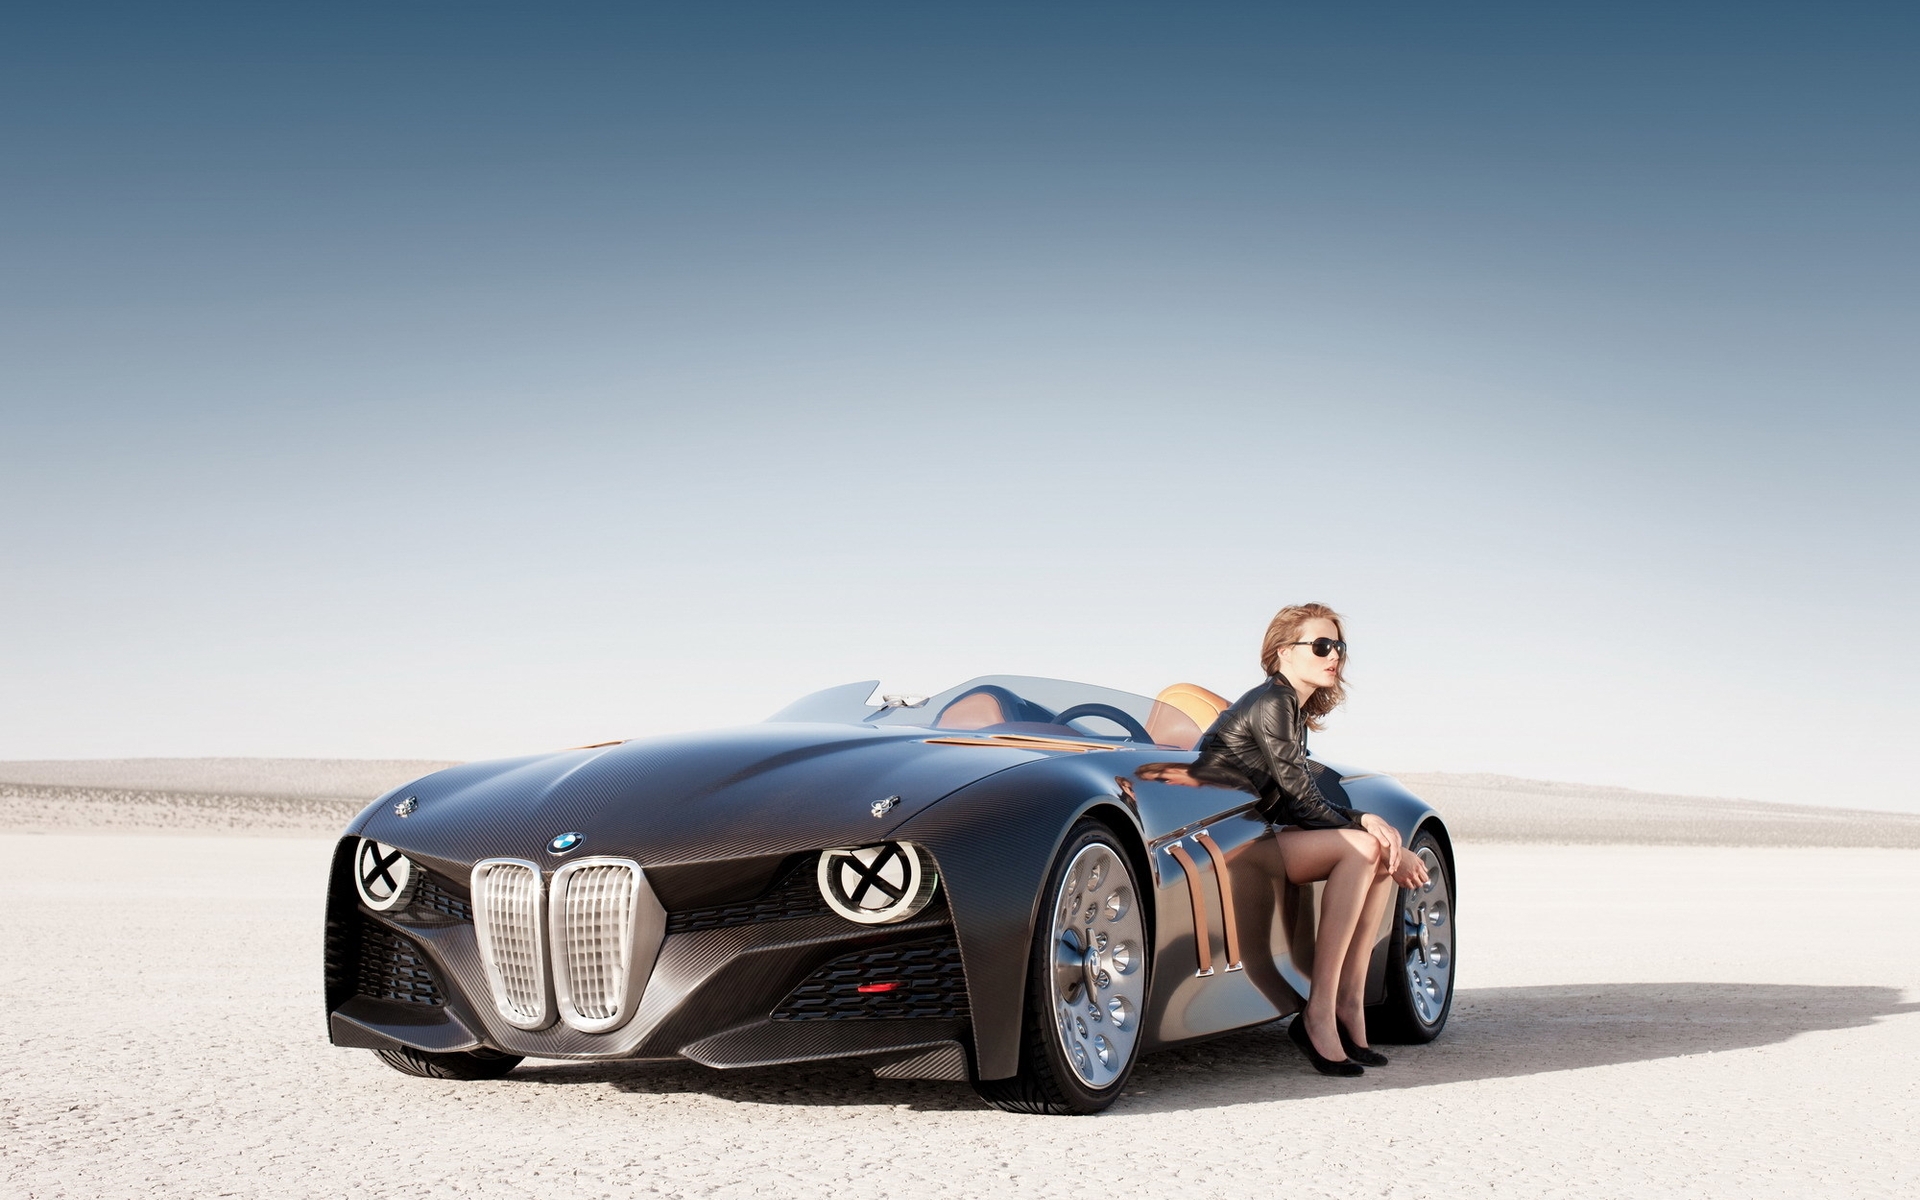 Image: BMW, girl, sitting, desert, style, BMW 328, Hommage